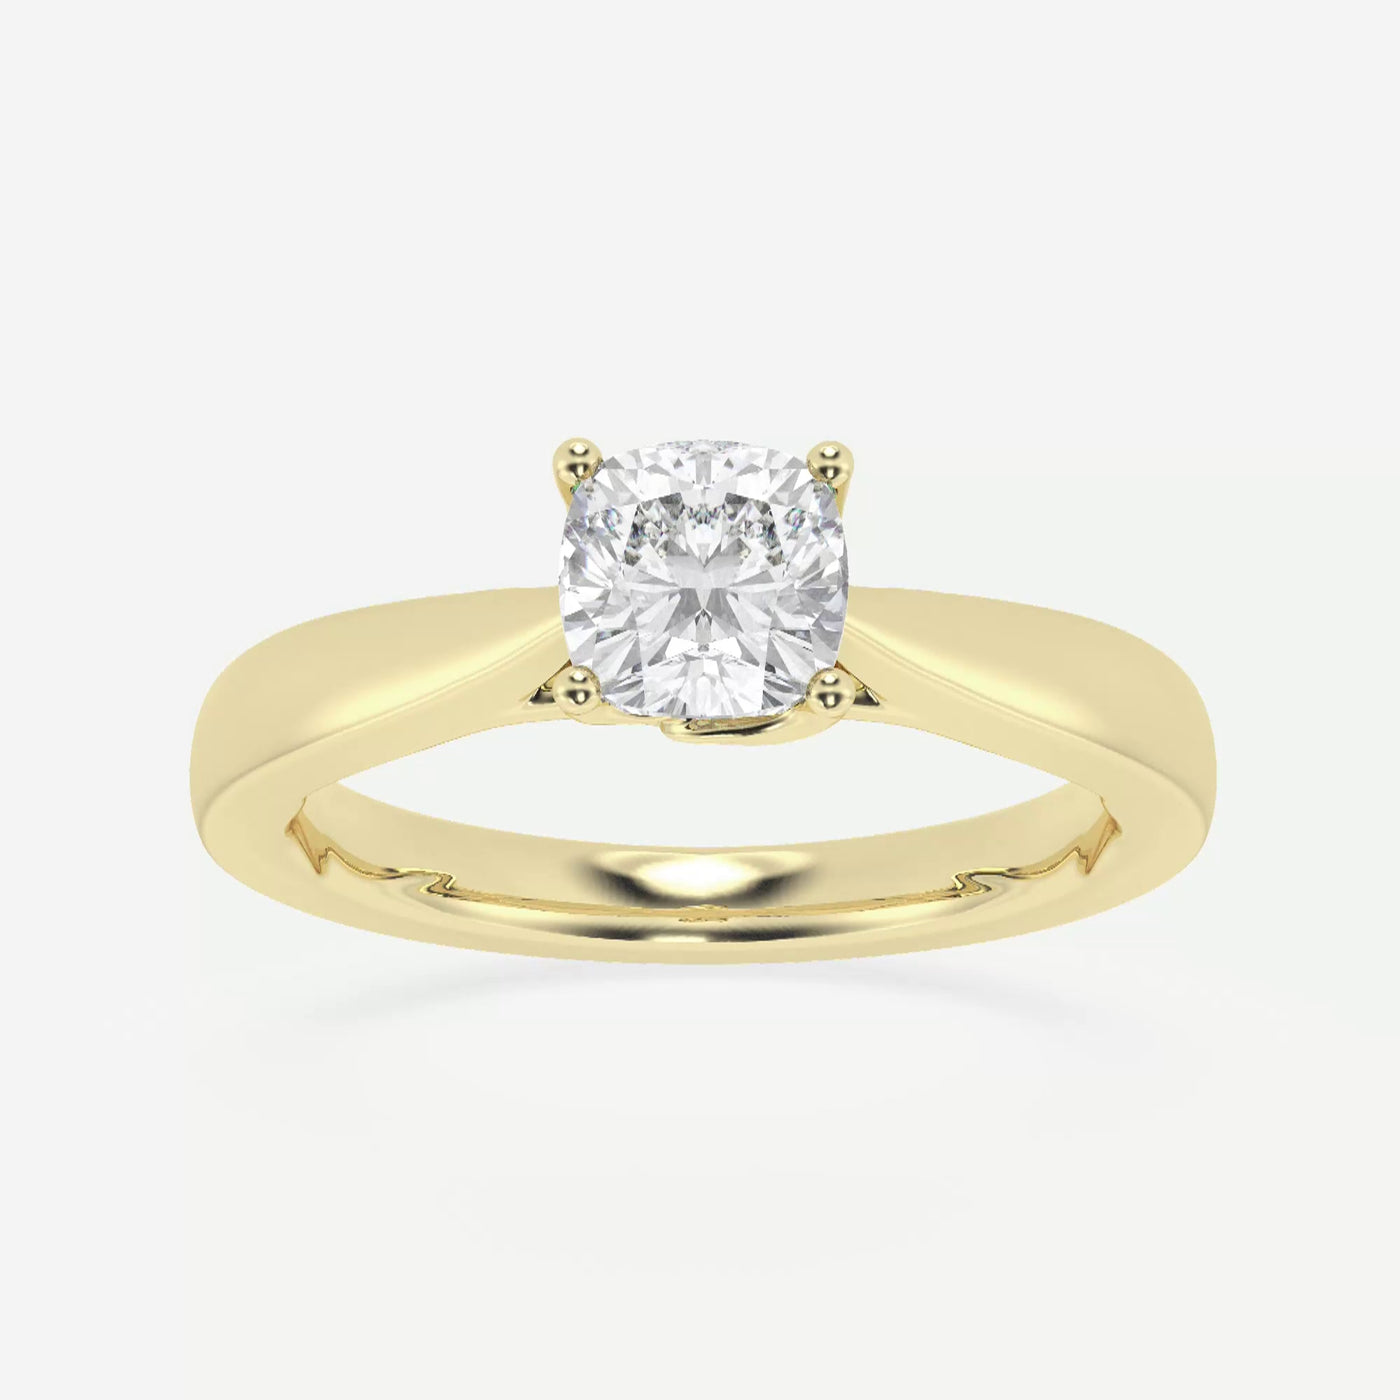 _main_image@SKU:LGD-TXR01769-GY3~#carat_1.00#diamond-quality_def,-vs1+#metal_18k-yellow-gold